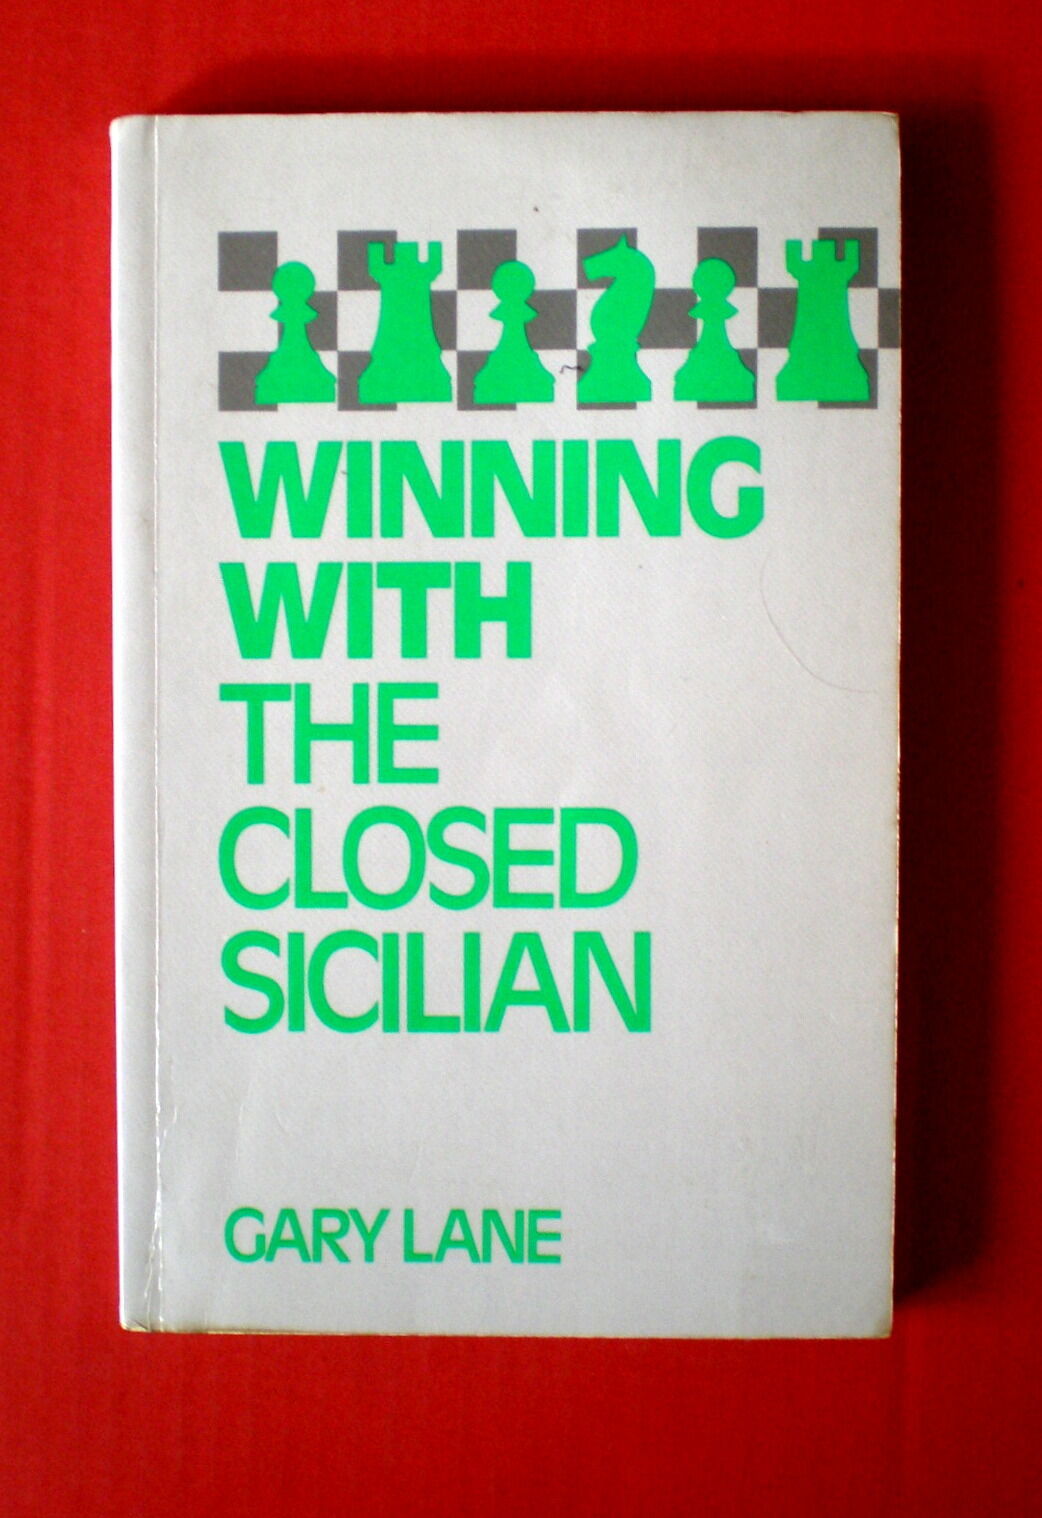 Lane, Gary (1992). Winning with the Closed Sicilian. Batsford. ISBN 978-0-713469-72-1.